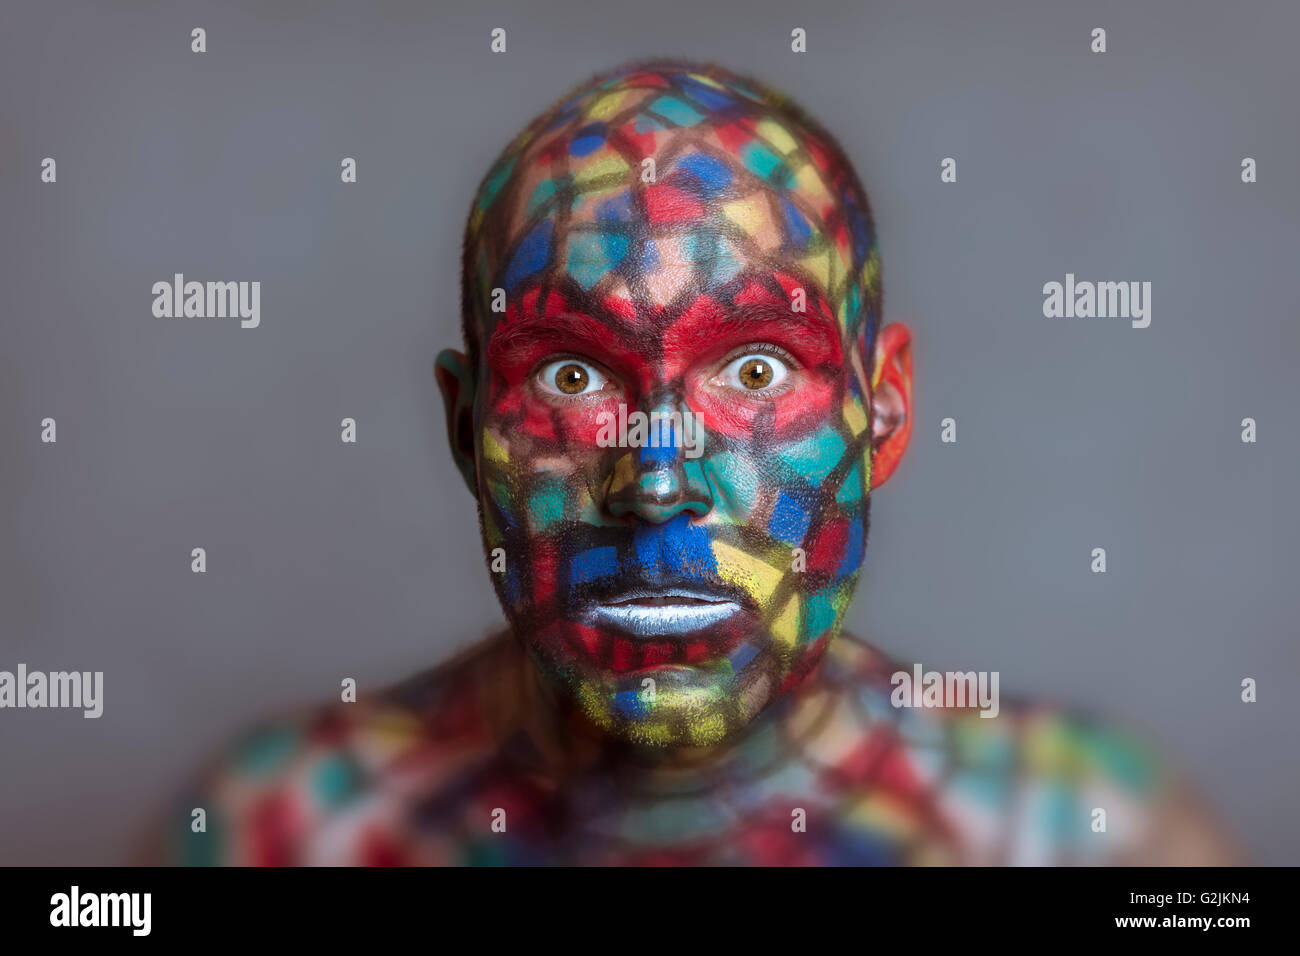 Shocked Superhero portrait, colorful face art with tilt shift and motion blur effect. Stock Photo